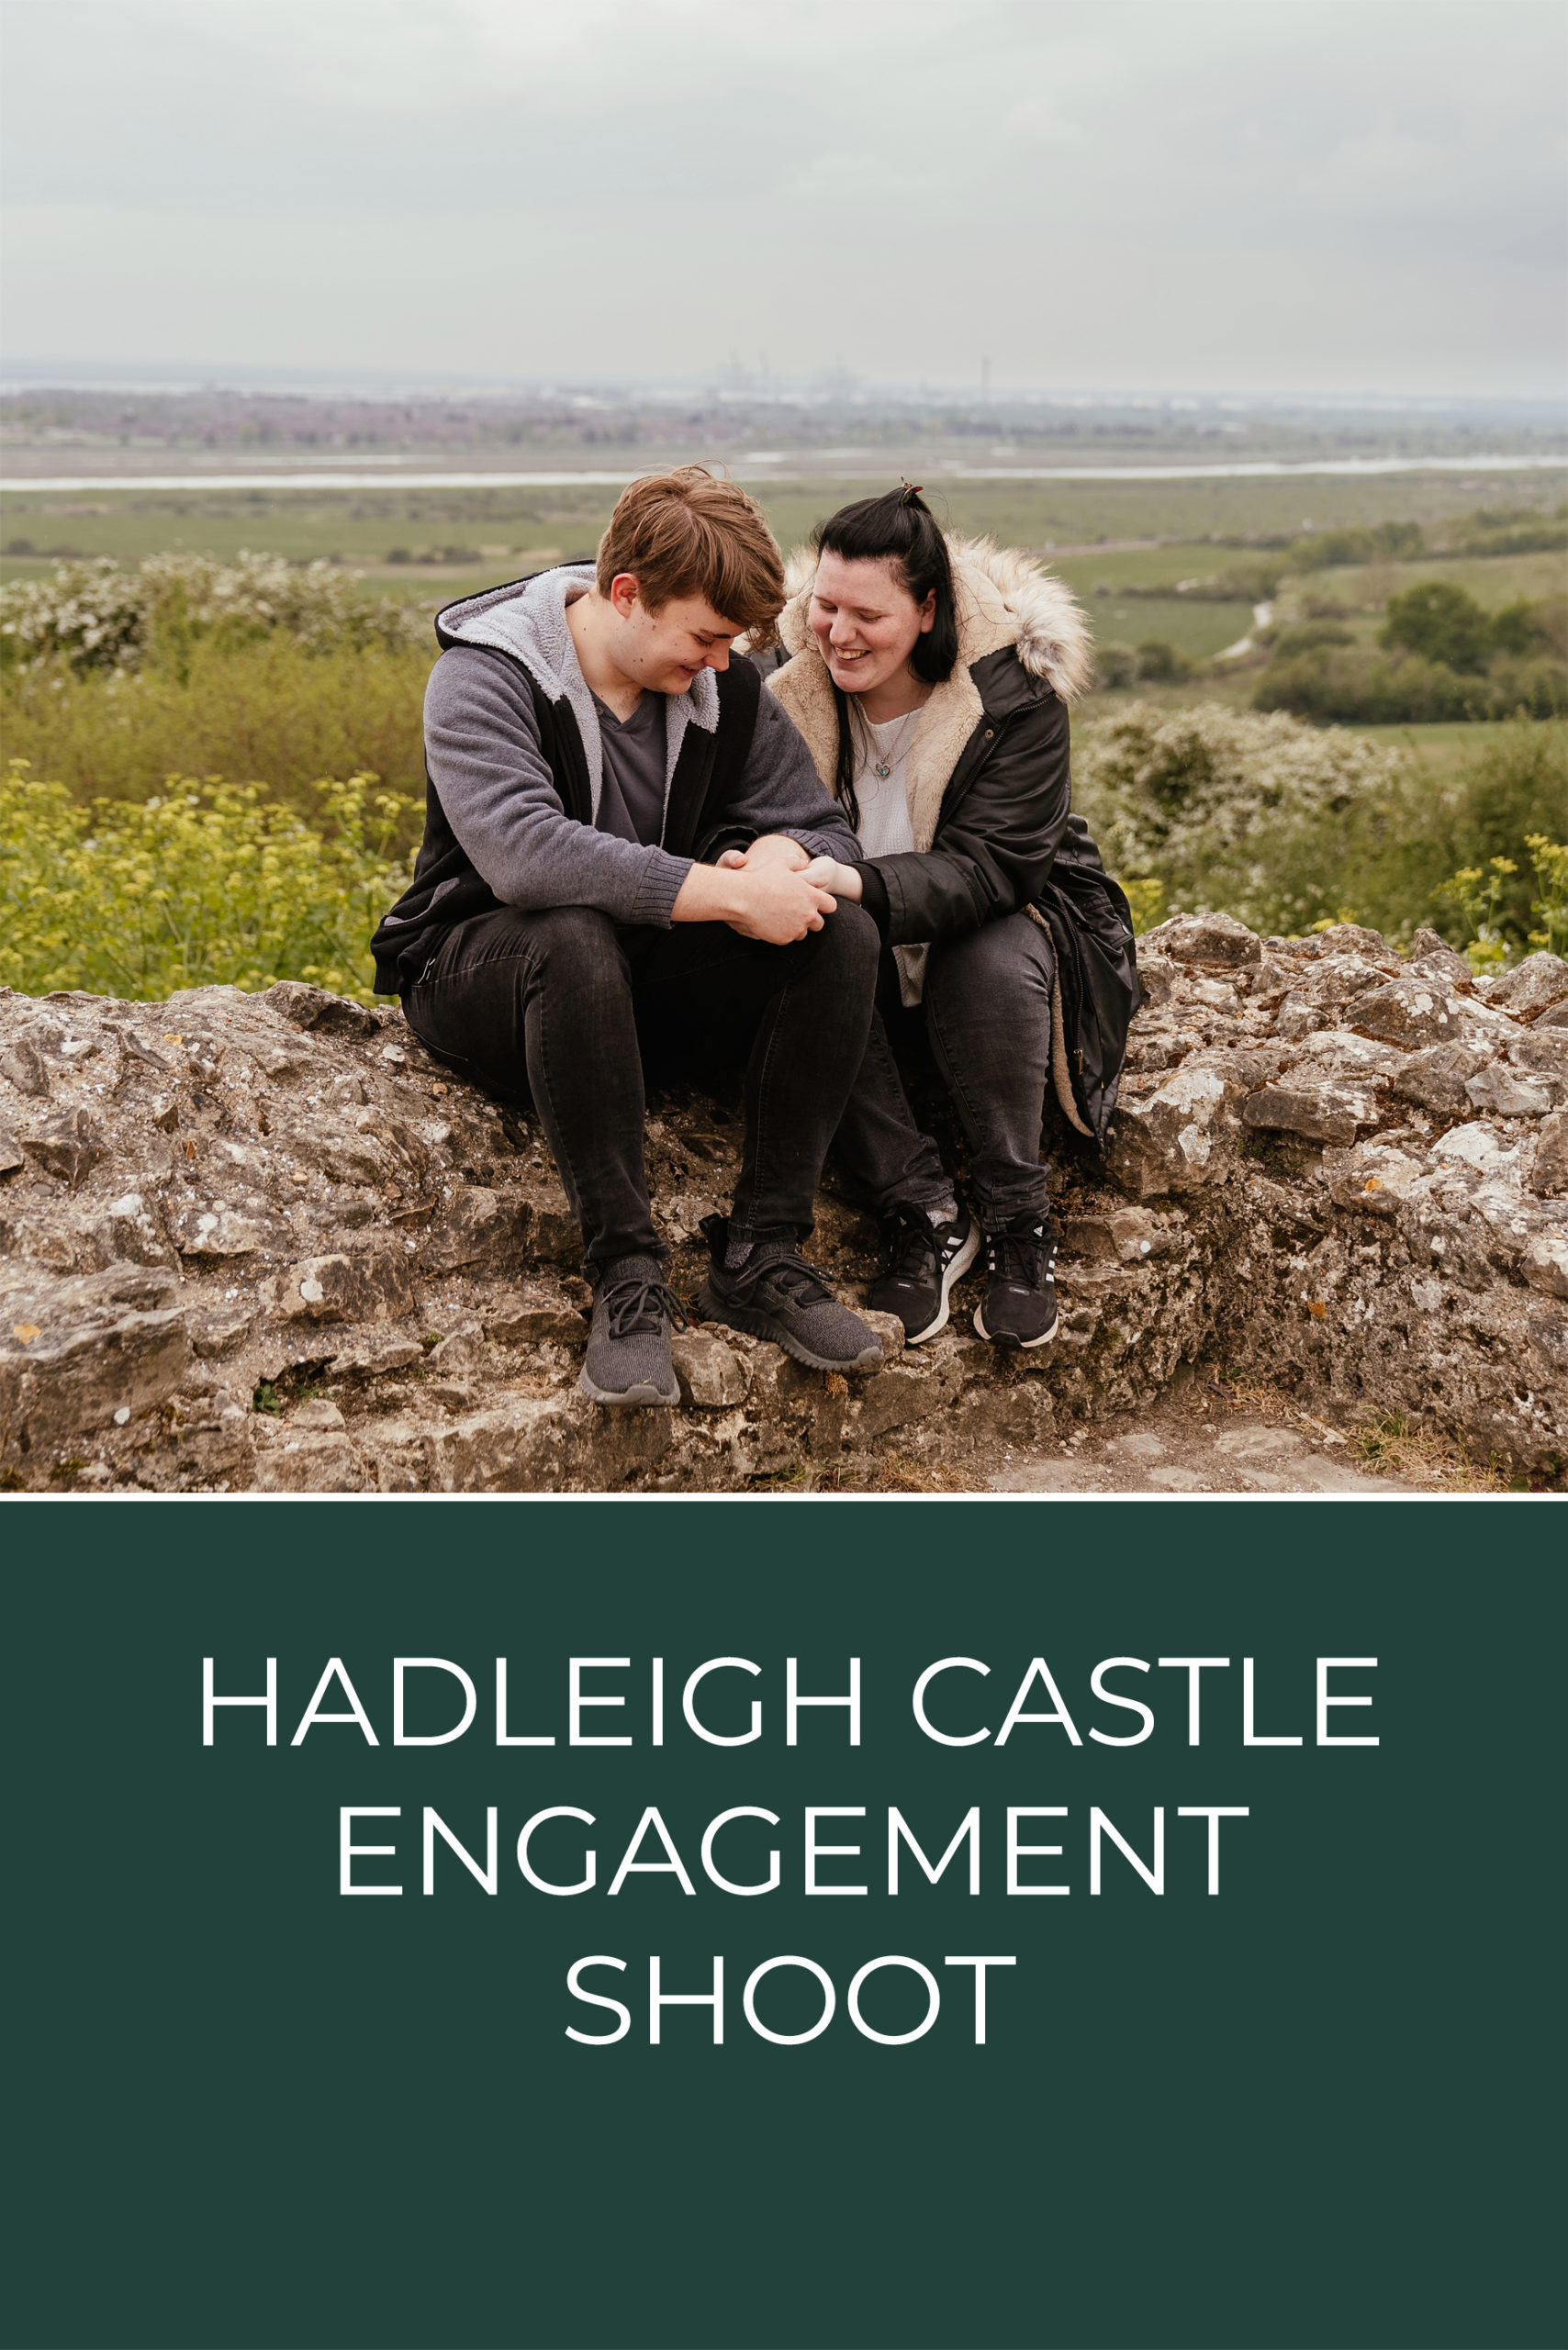 Hadleigh Castle Engagement Shoot Pinterest